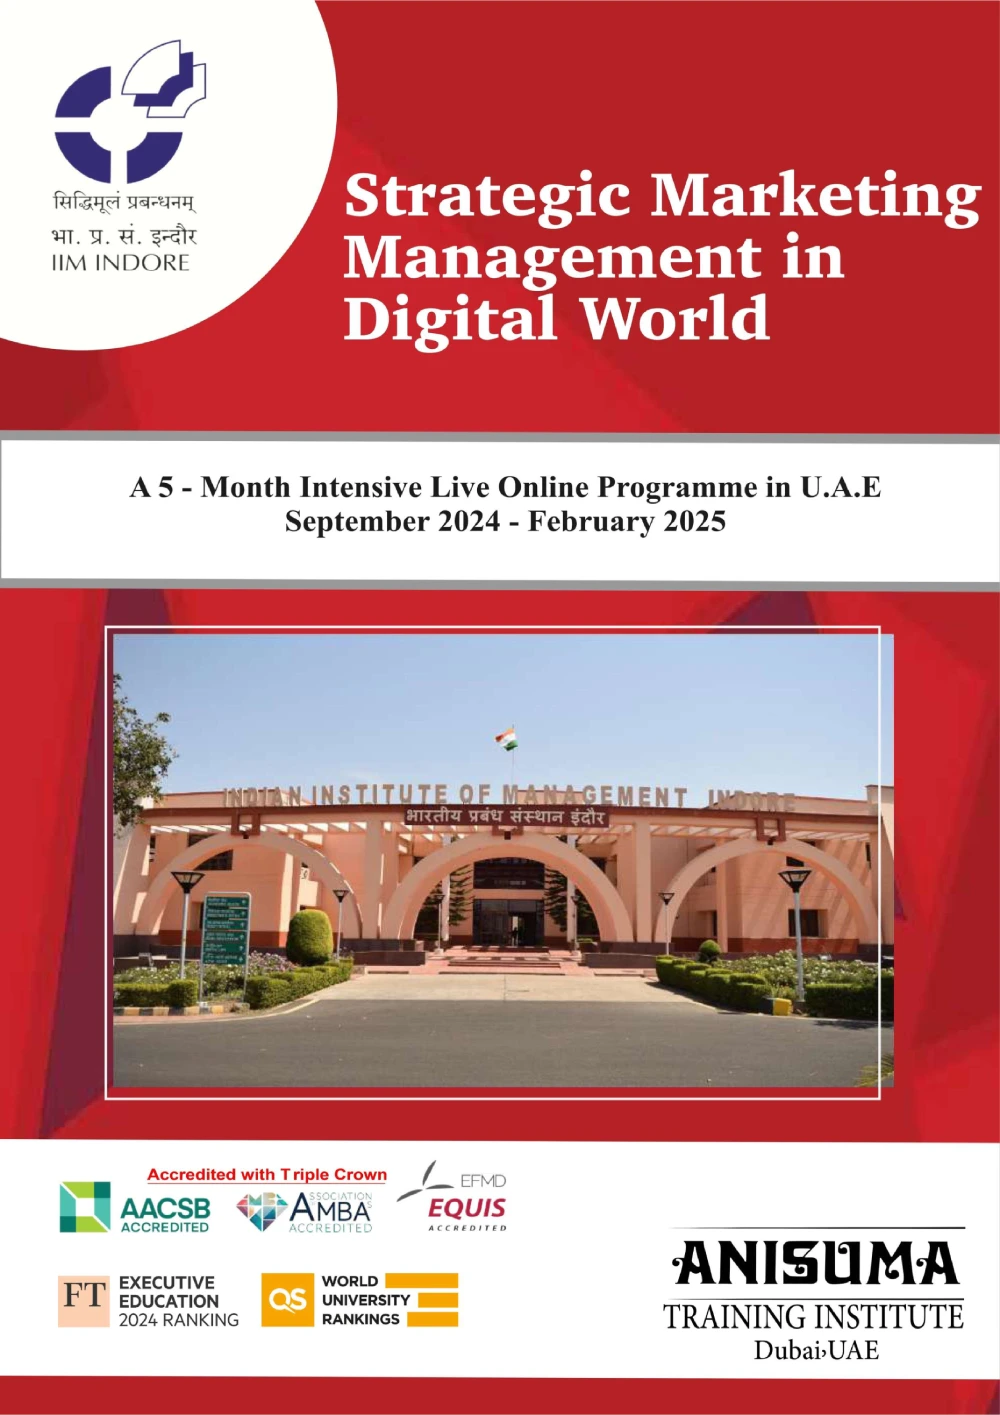 Strategic Marketing Management in Digital World (SMMe)